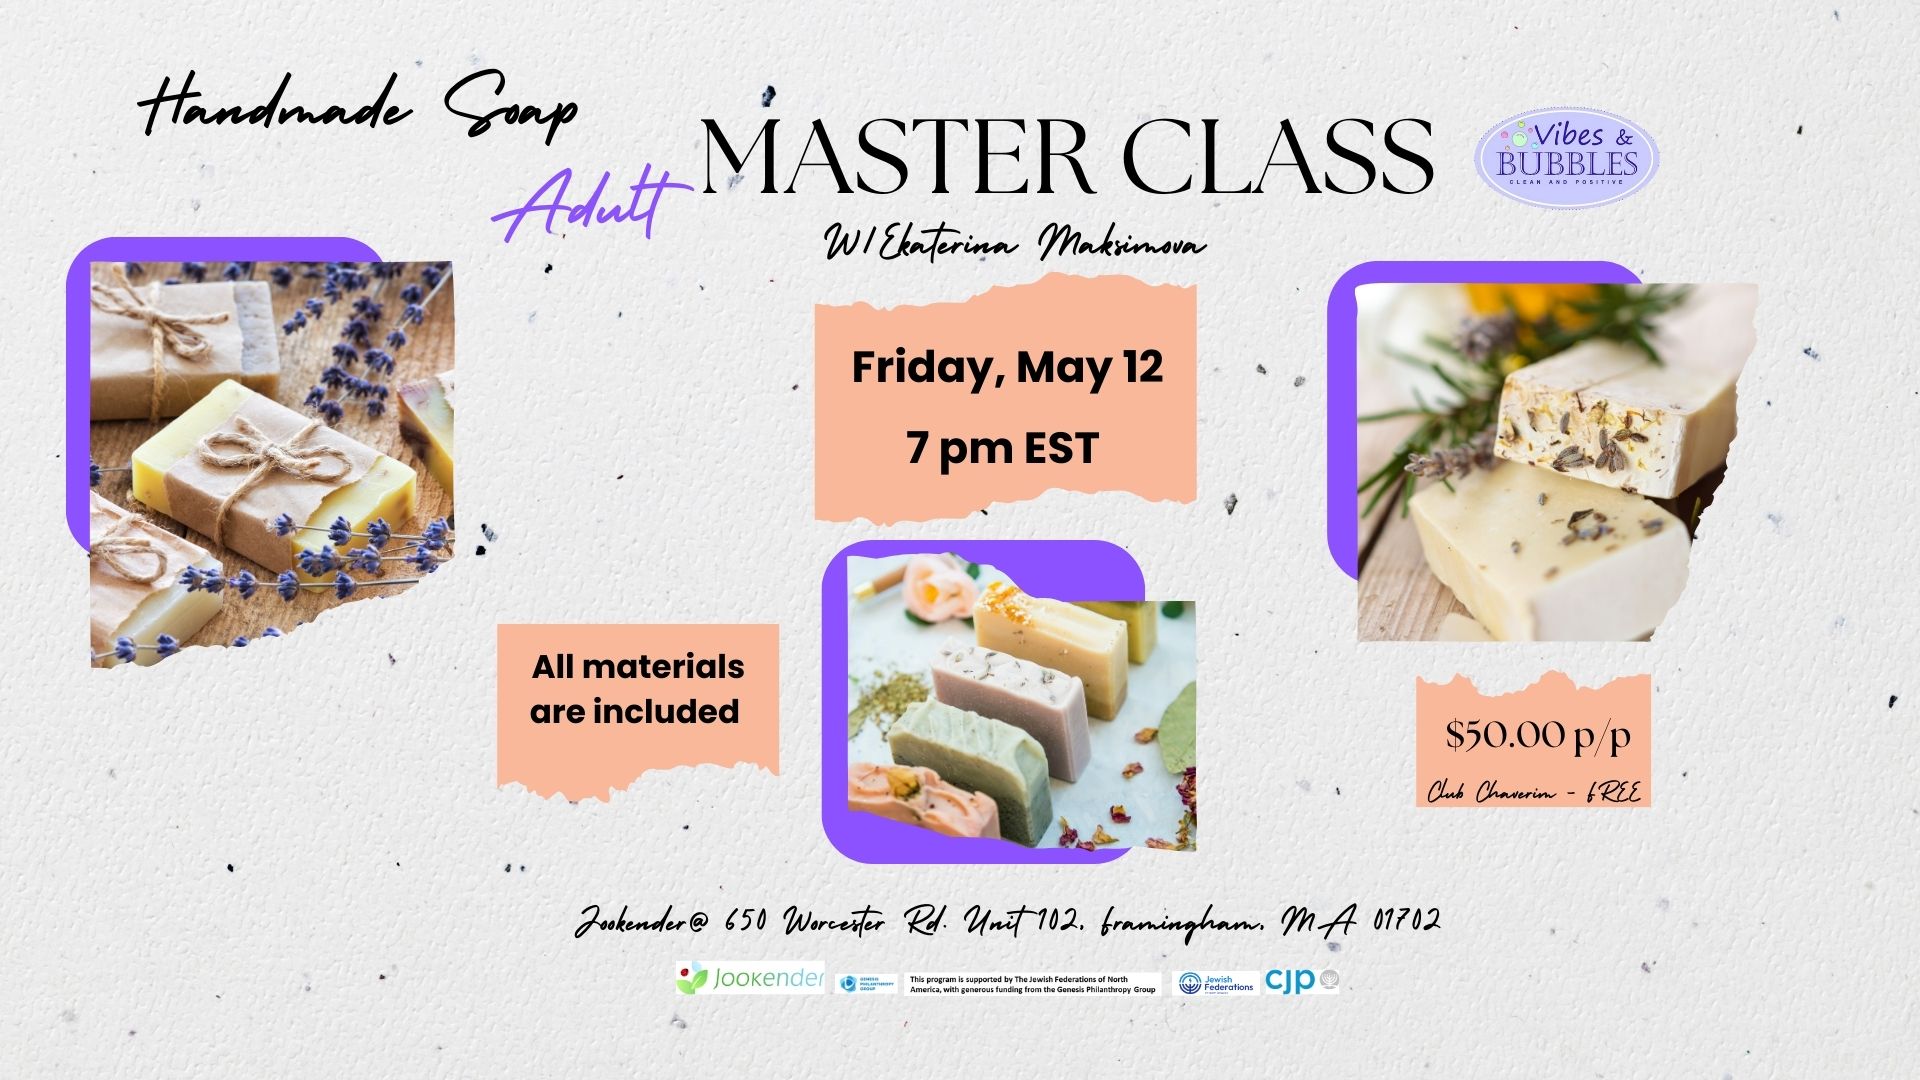 Handmade Soap Adult Master Class